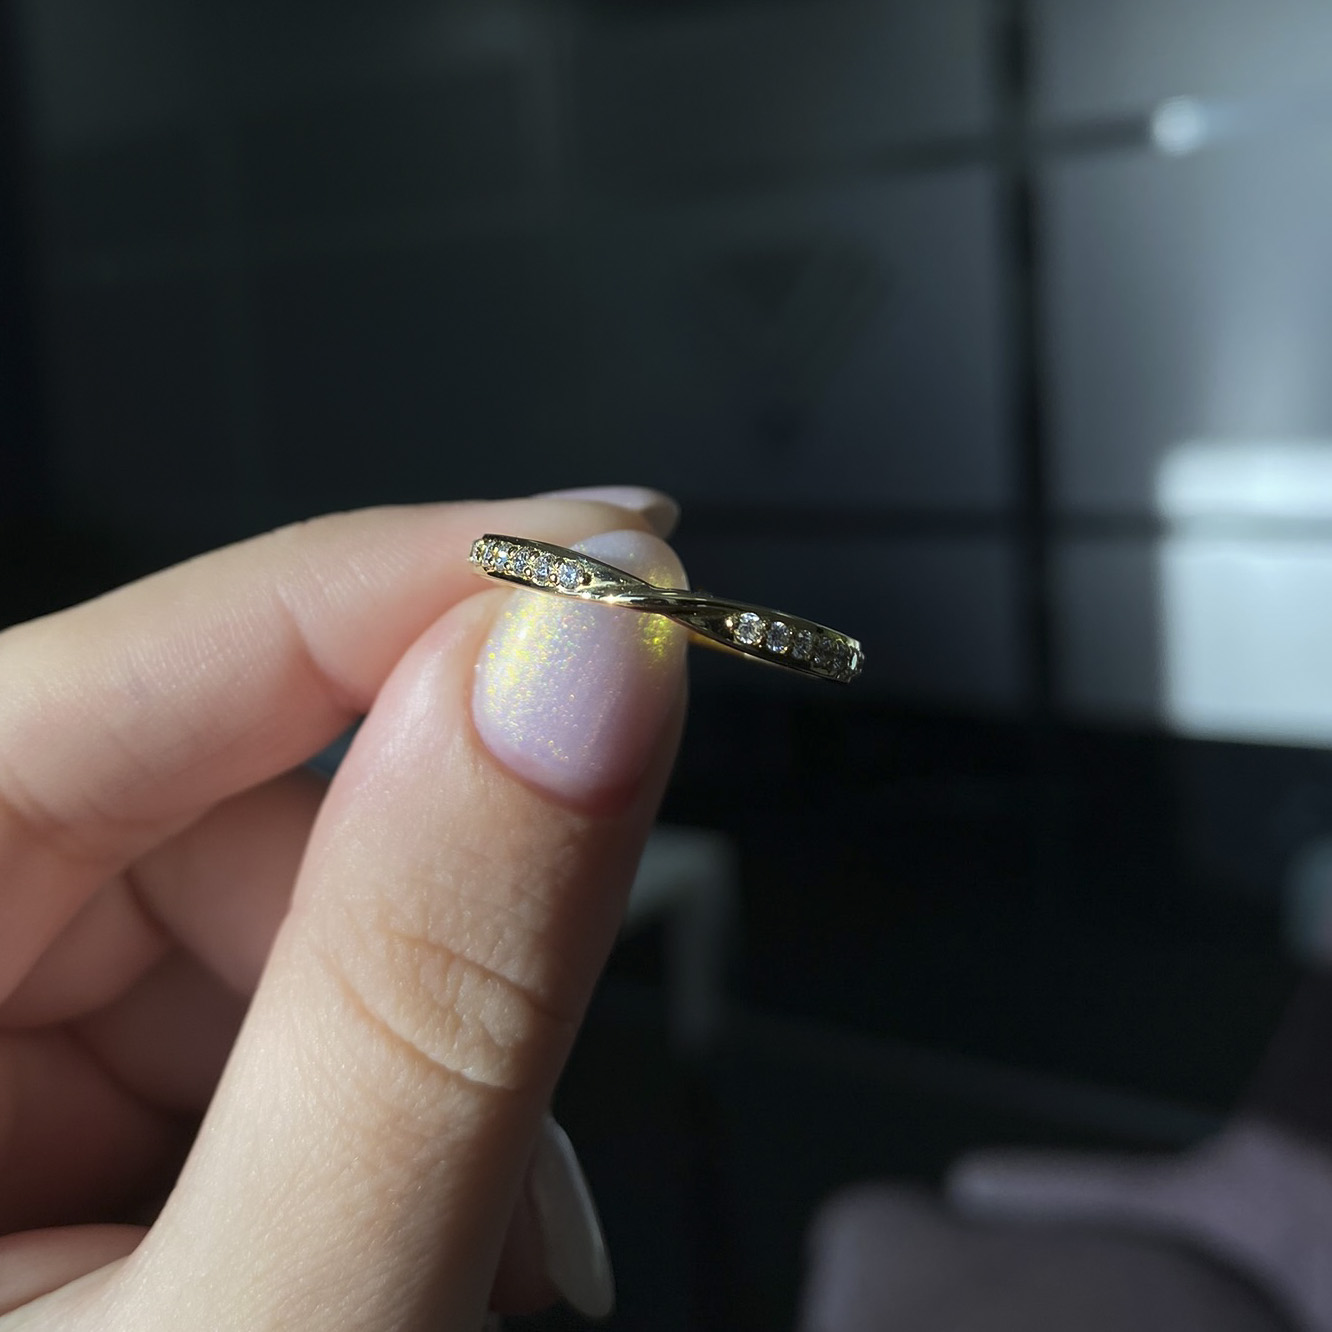 18K Yellow Gold 2.5mm Ribbon Half Grain Diamond Set Ring